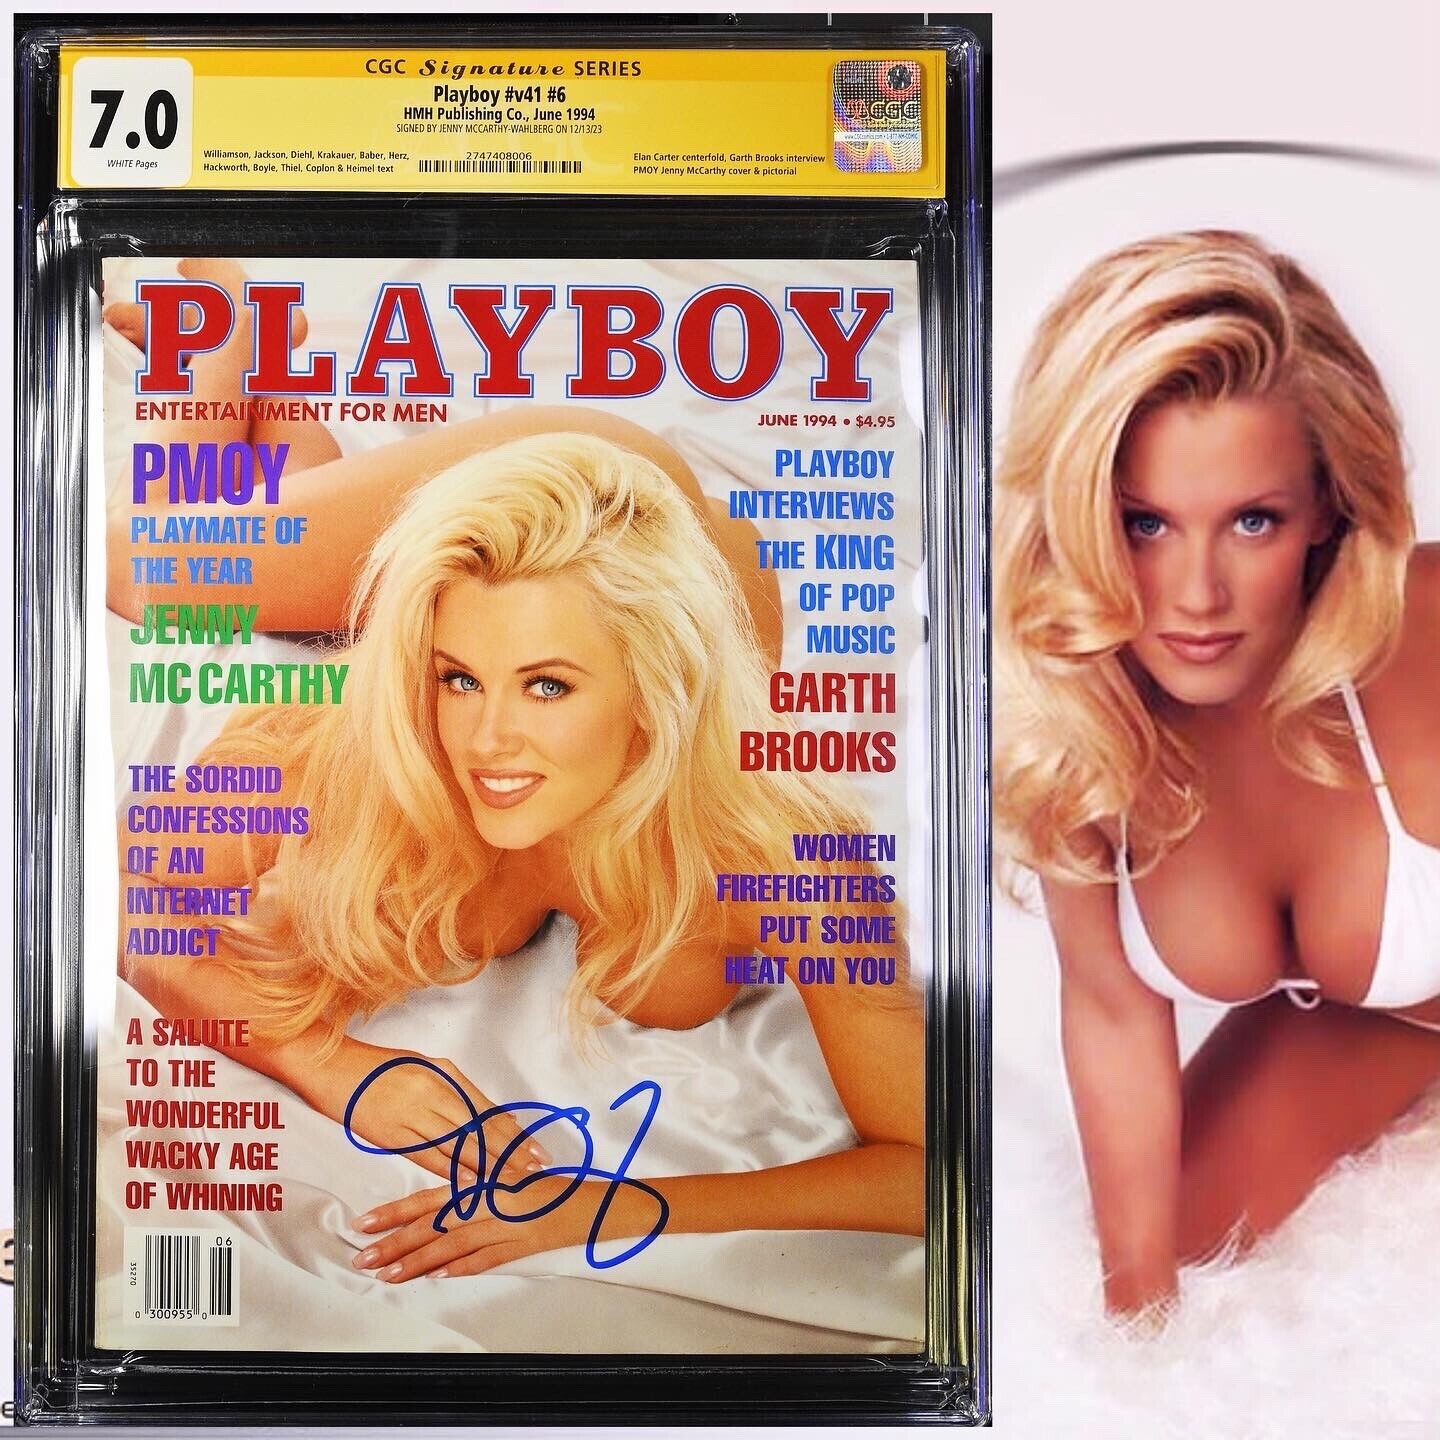 CGC 7.0 SS Playboy v41 #6 signed by Jenny McCarthy June 1994 WP PMOY